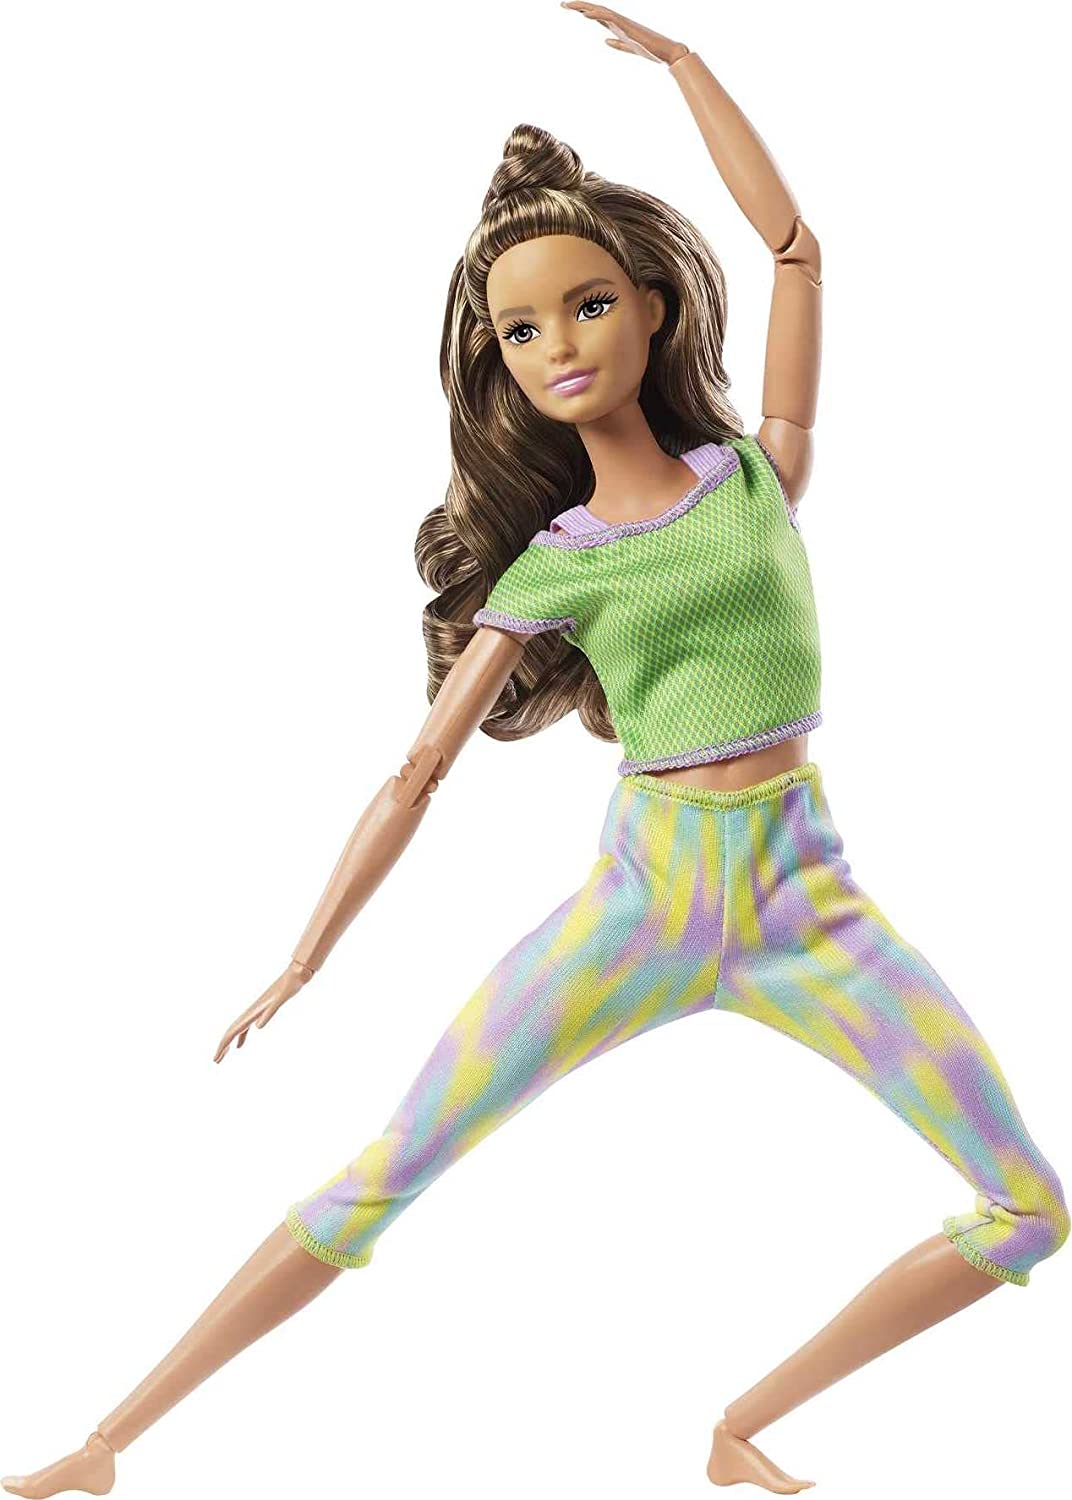 Barbie Bambola - Made To Move